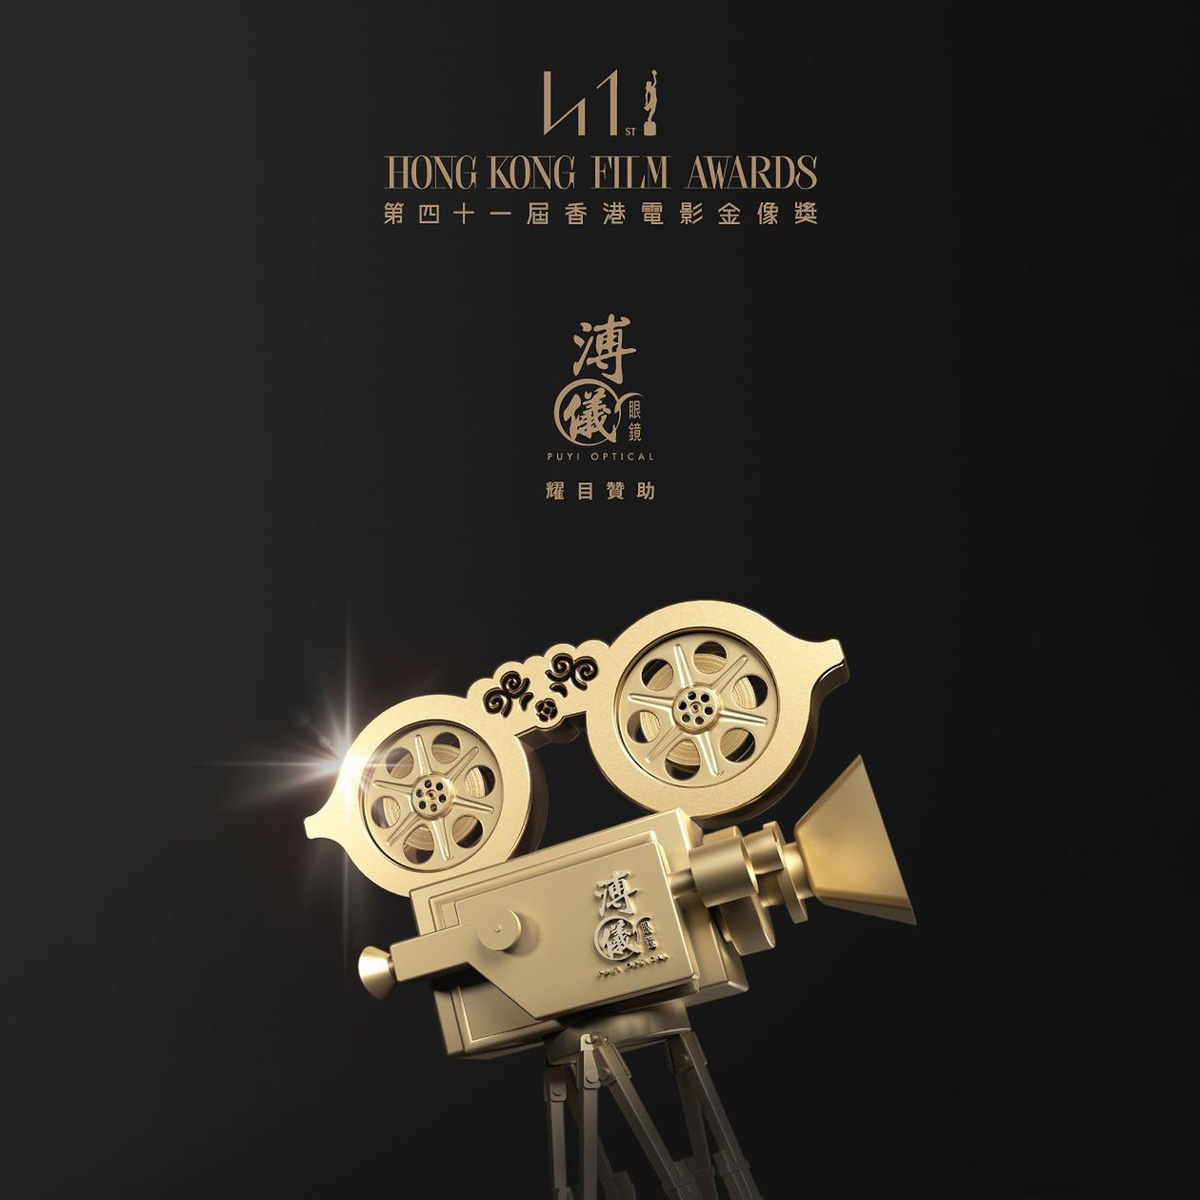 PUYI OPTICAL - THE "DAZZLING SPONSOR" OF "THE 41st HONG KONG FILM AWARDS"